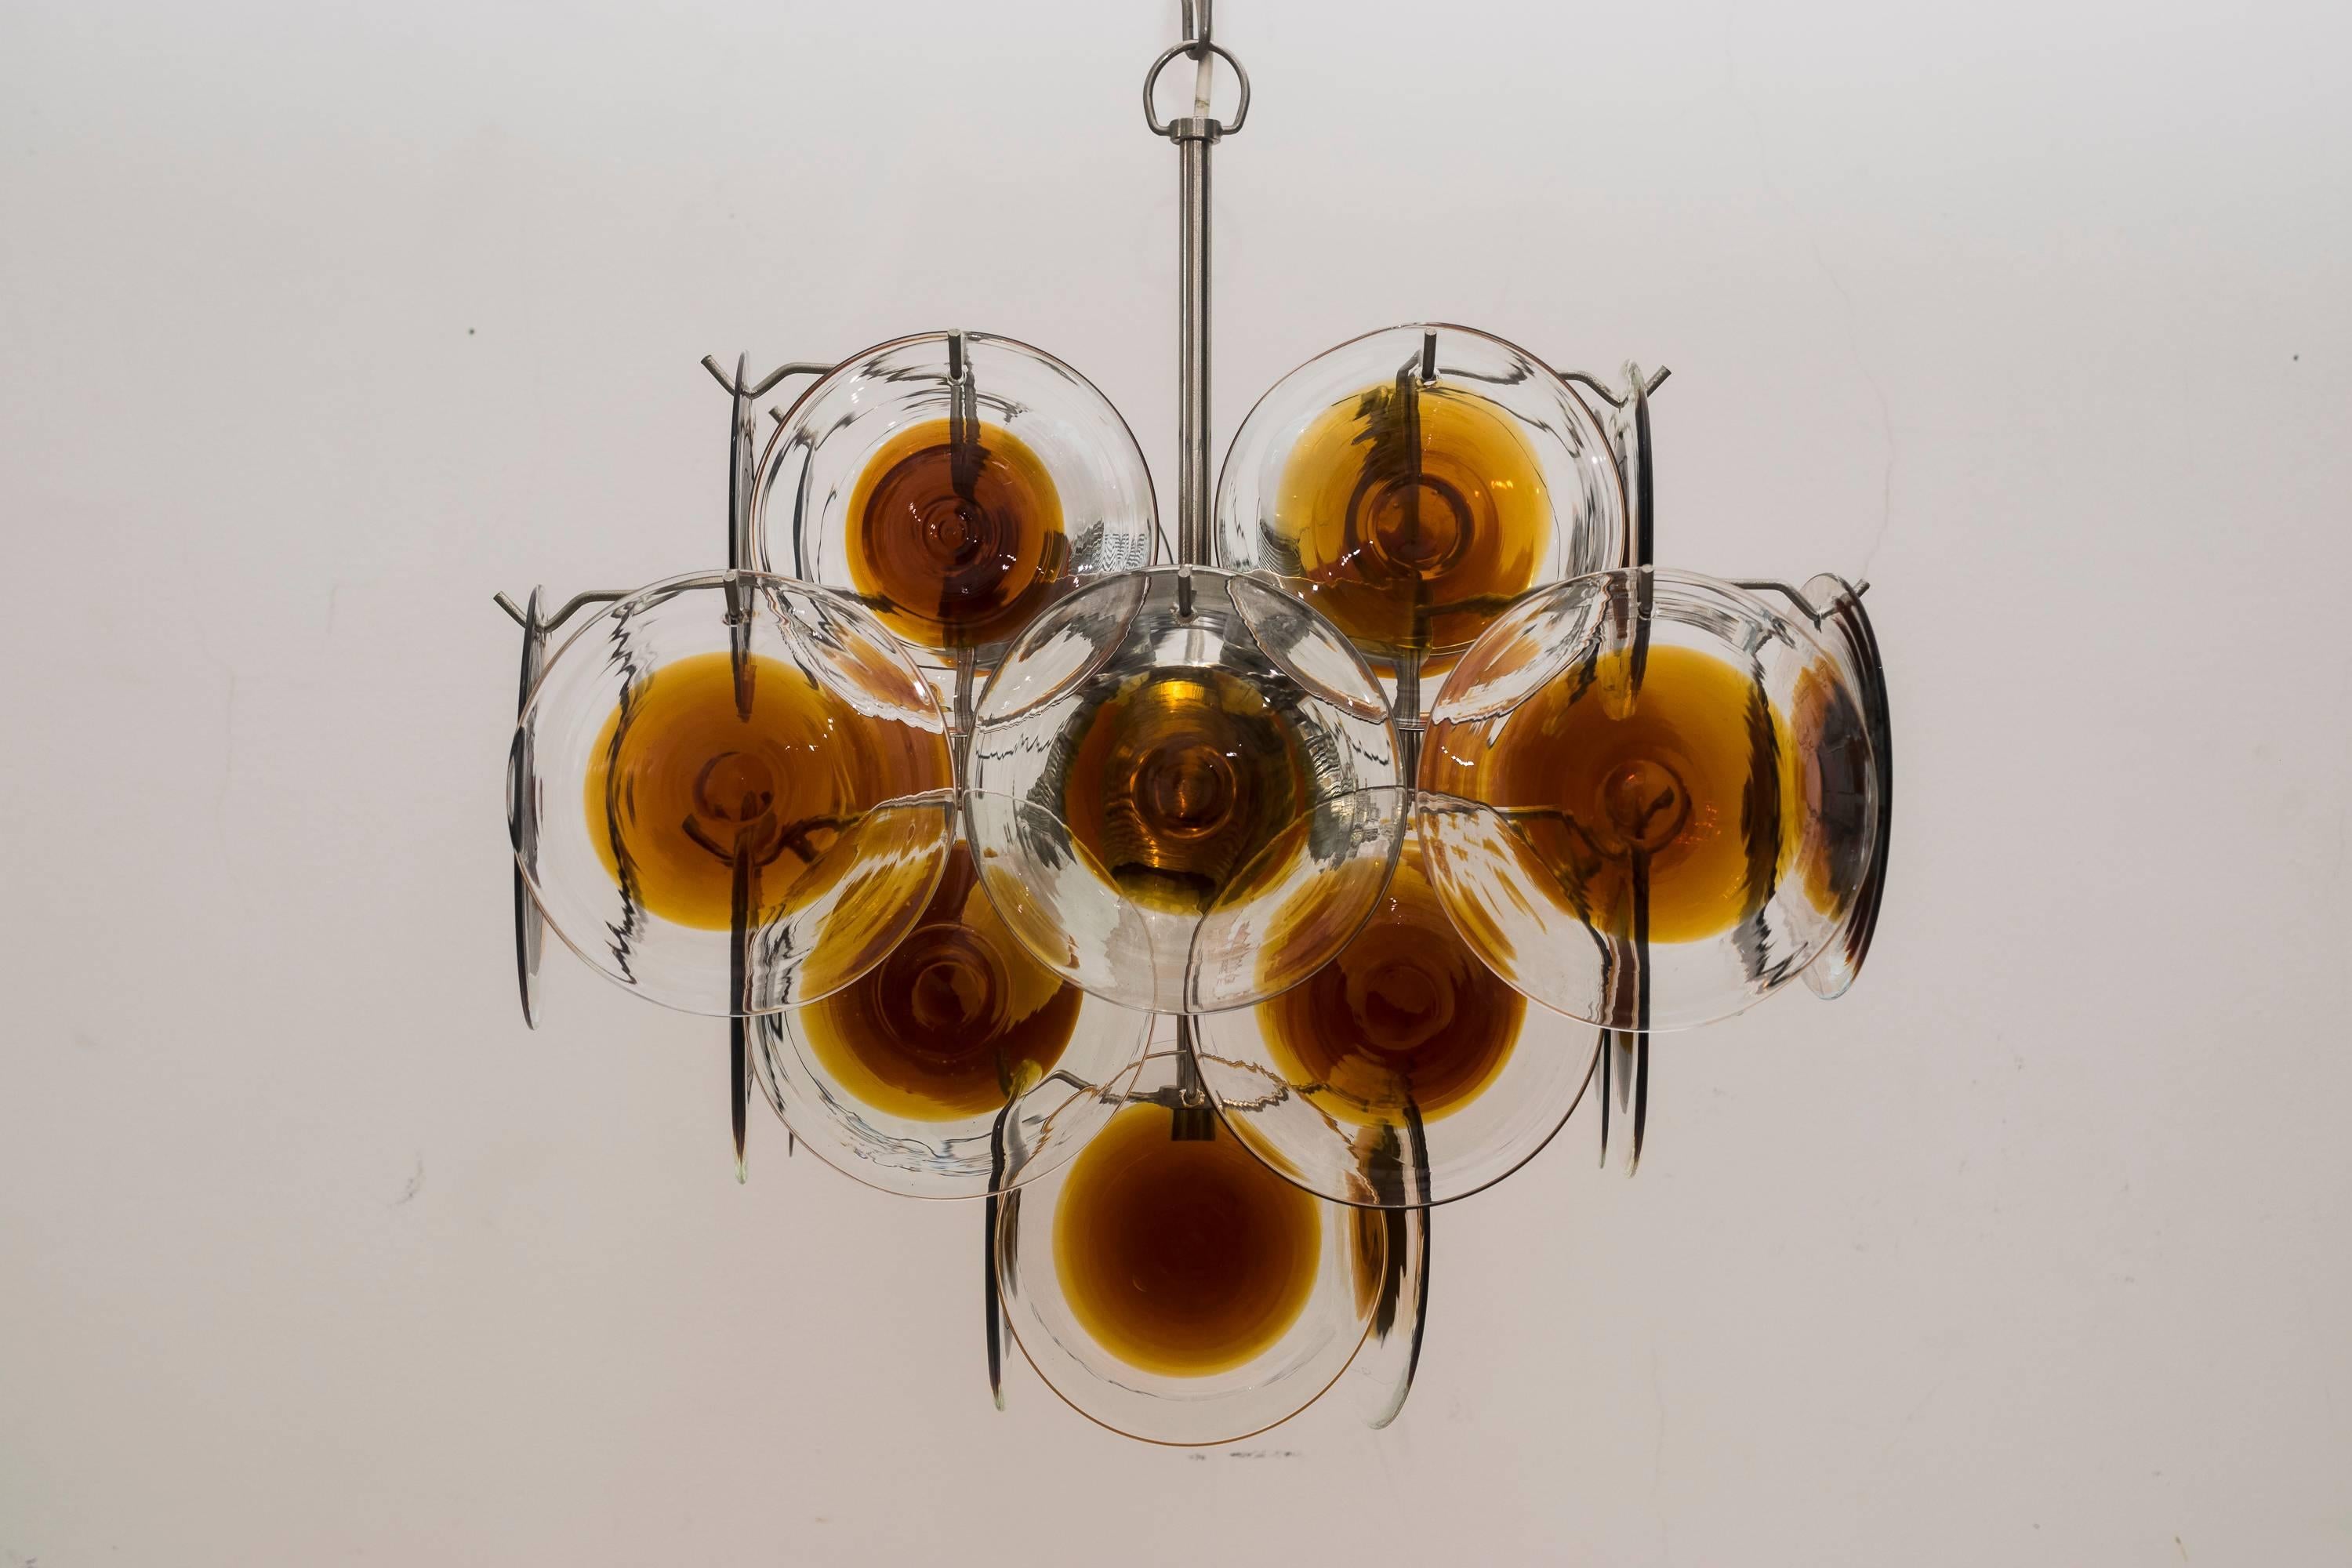 Vistosi Murano chandelier
Original condition.